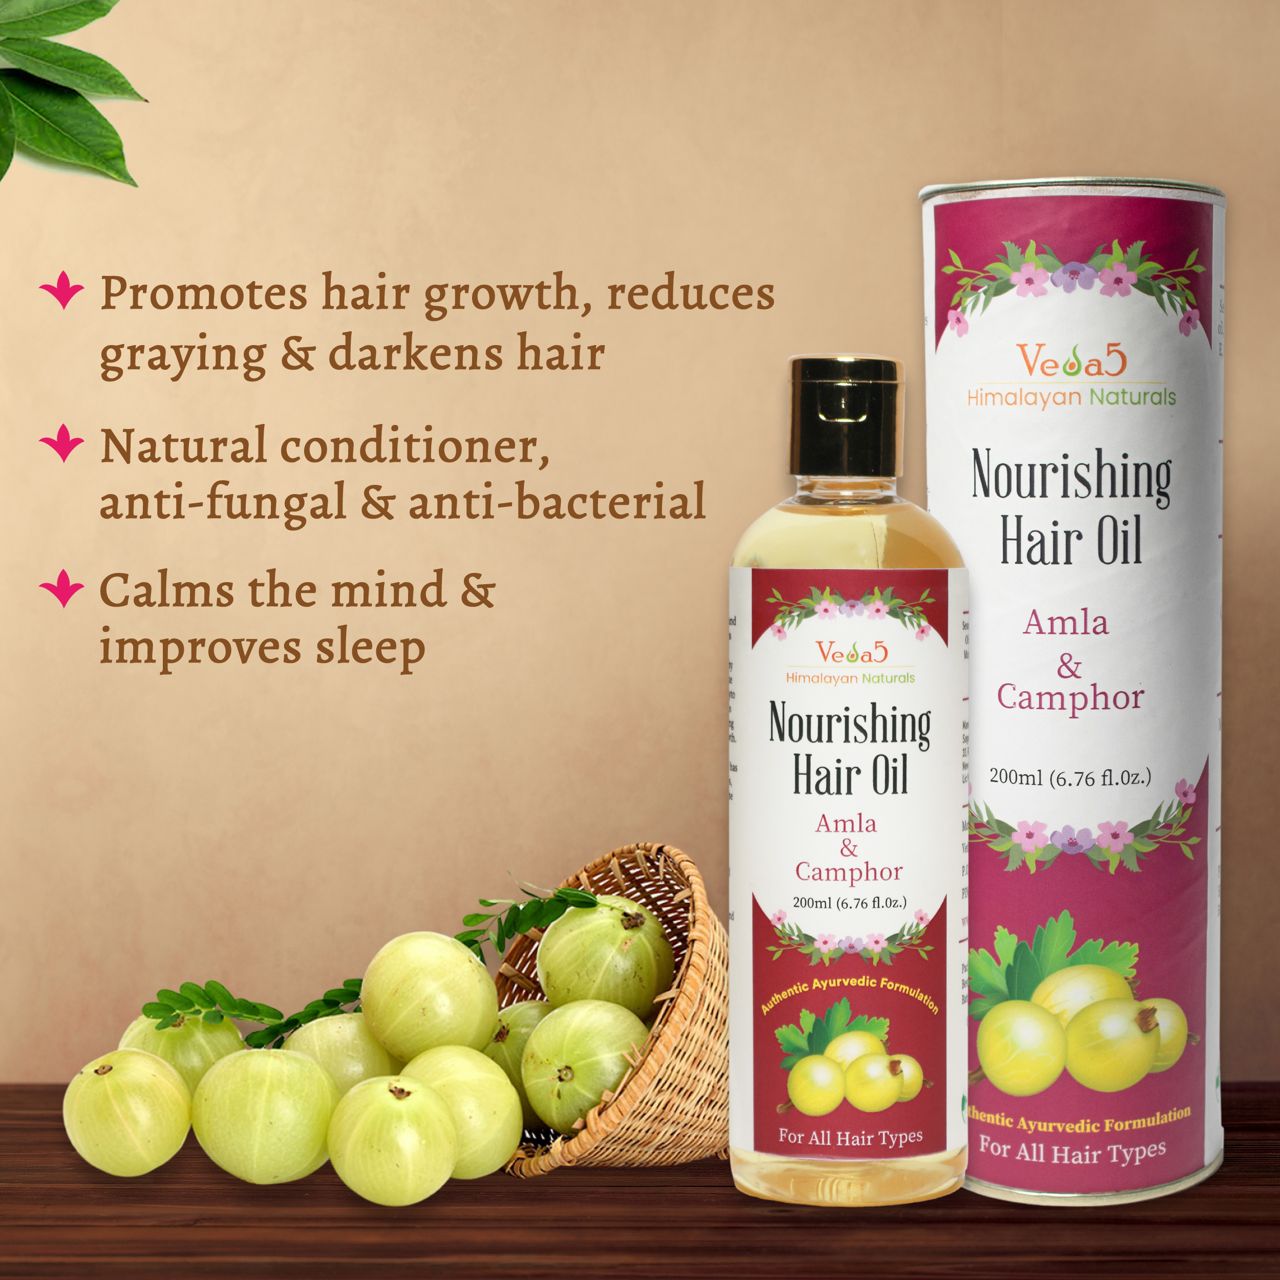 Nourishing Hair Oil Amla Camphor Benefits 2 Veda5 Himalayan Naturals